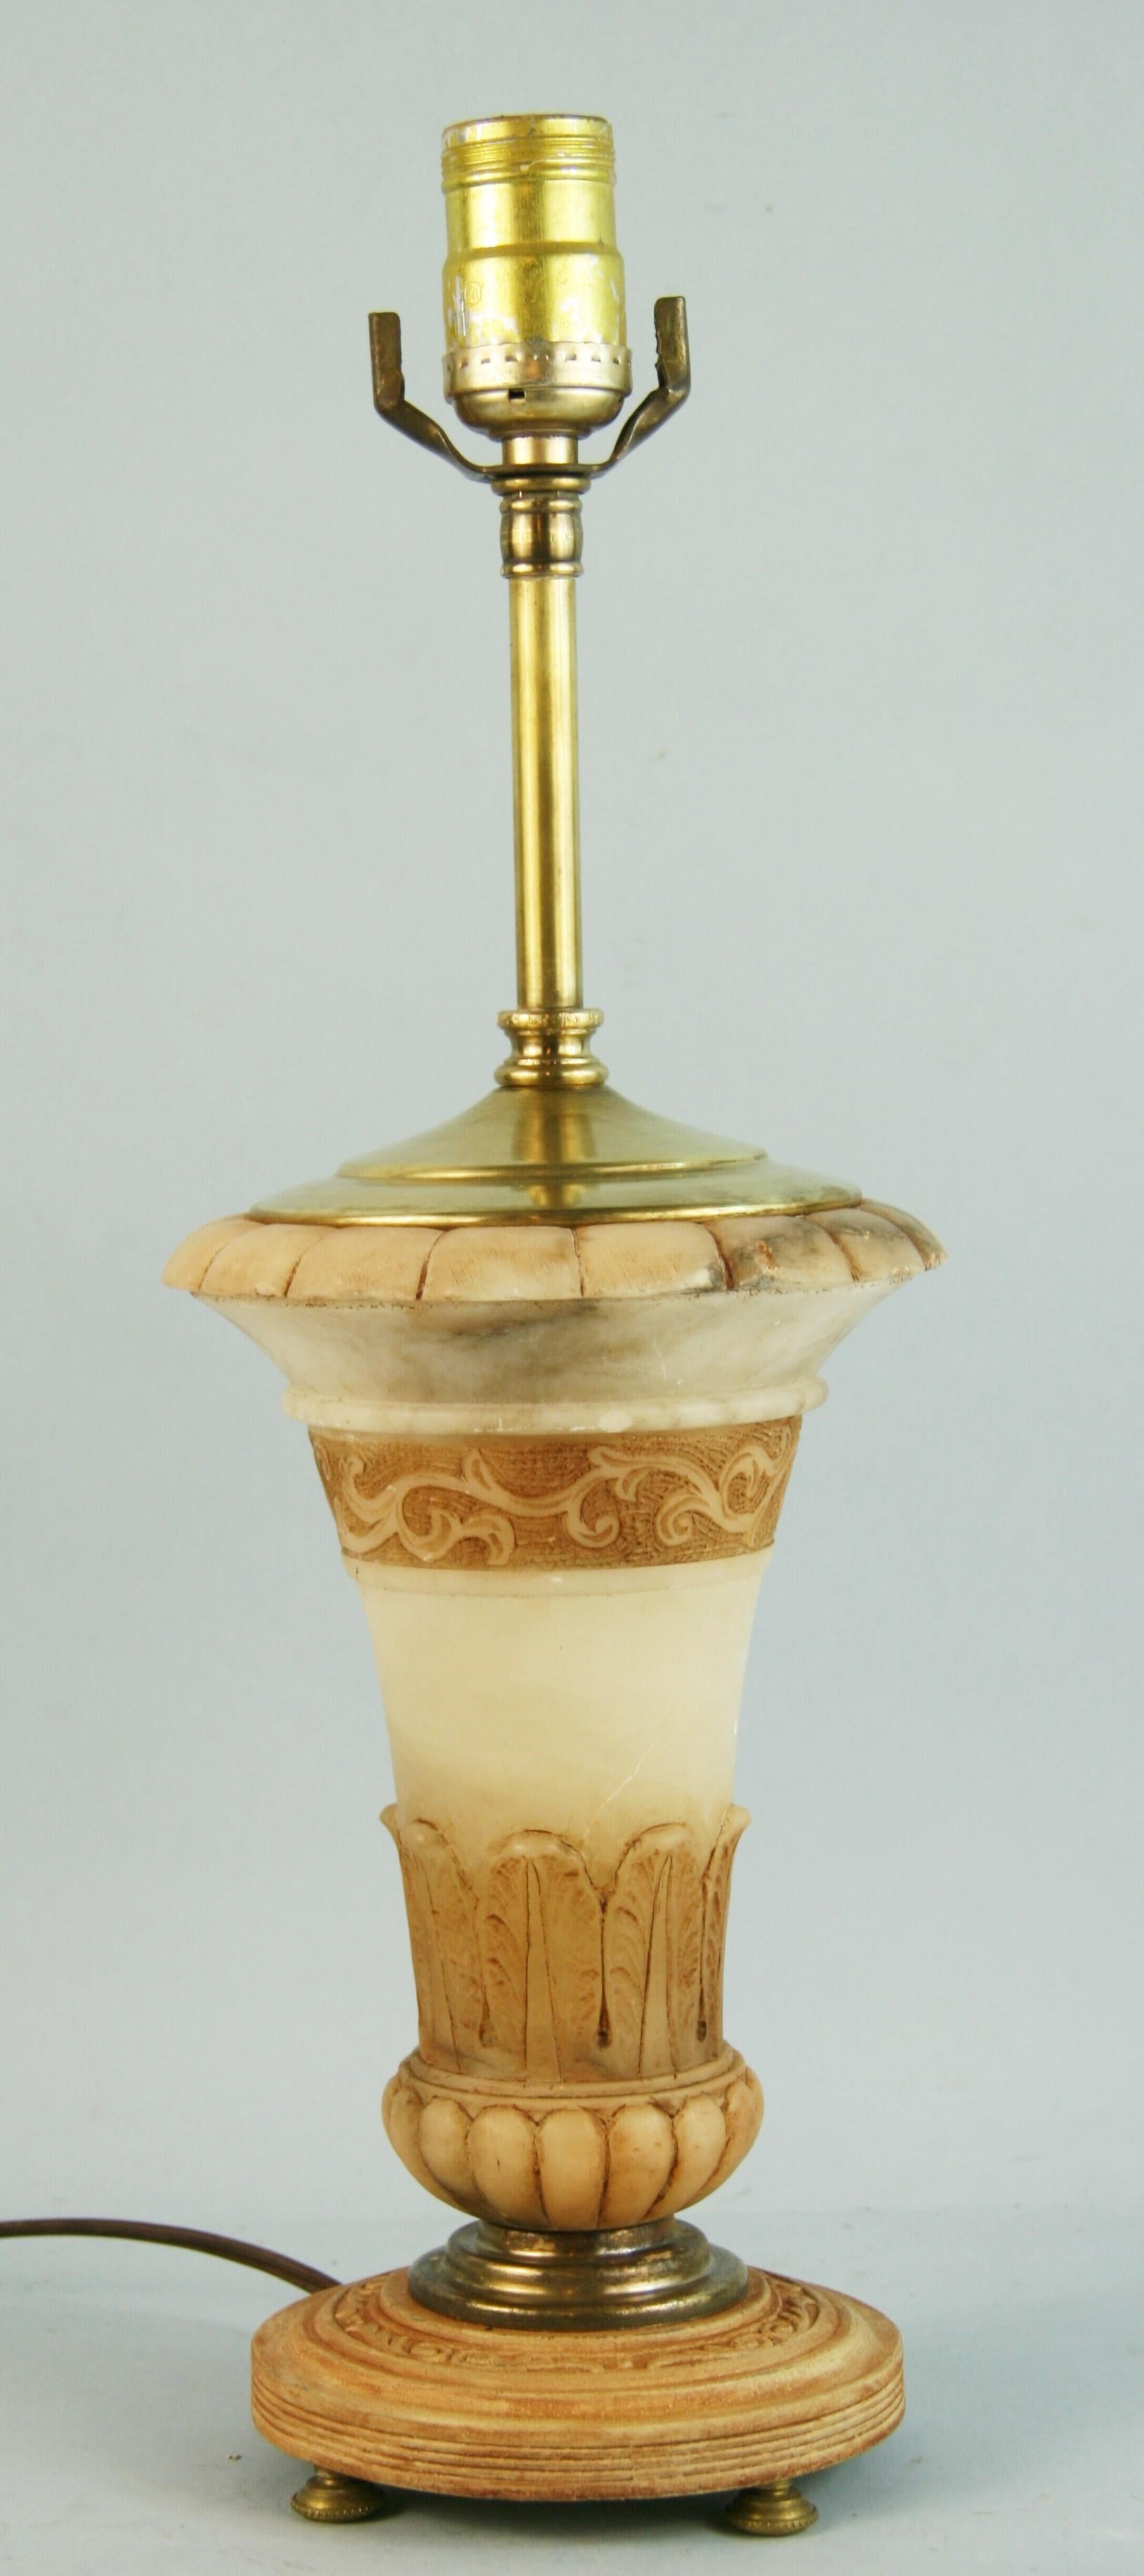 3-750 Lampe italienne en albâtre en forme d'urne 
Hauteur au sommet de l'urne 10
Hauteur au sommet de la prise de courant 18